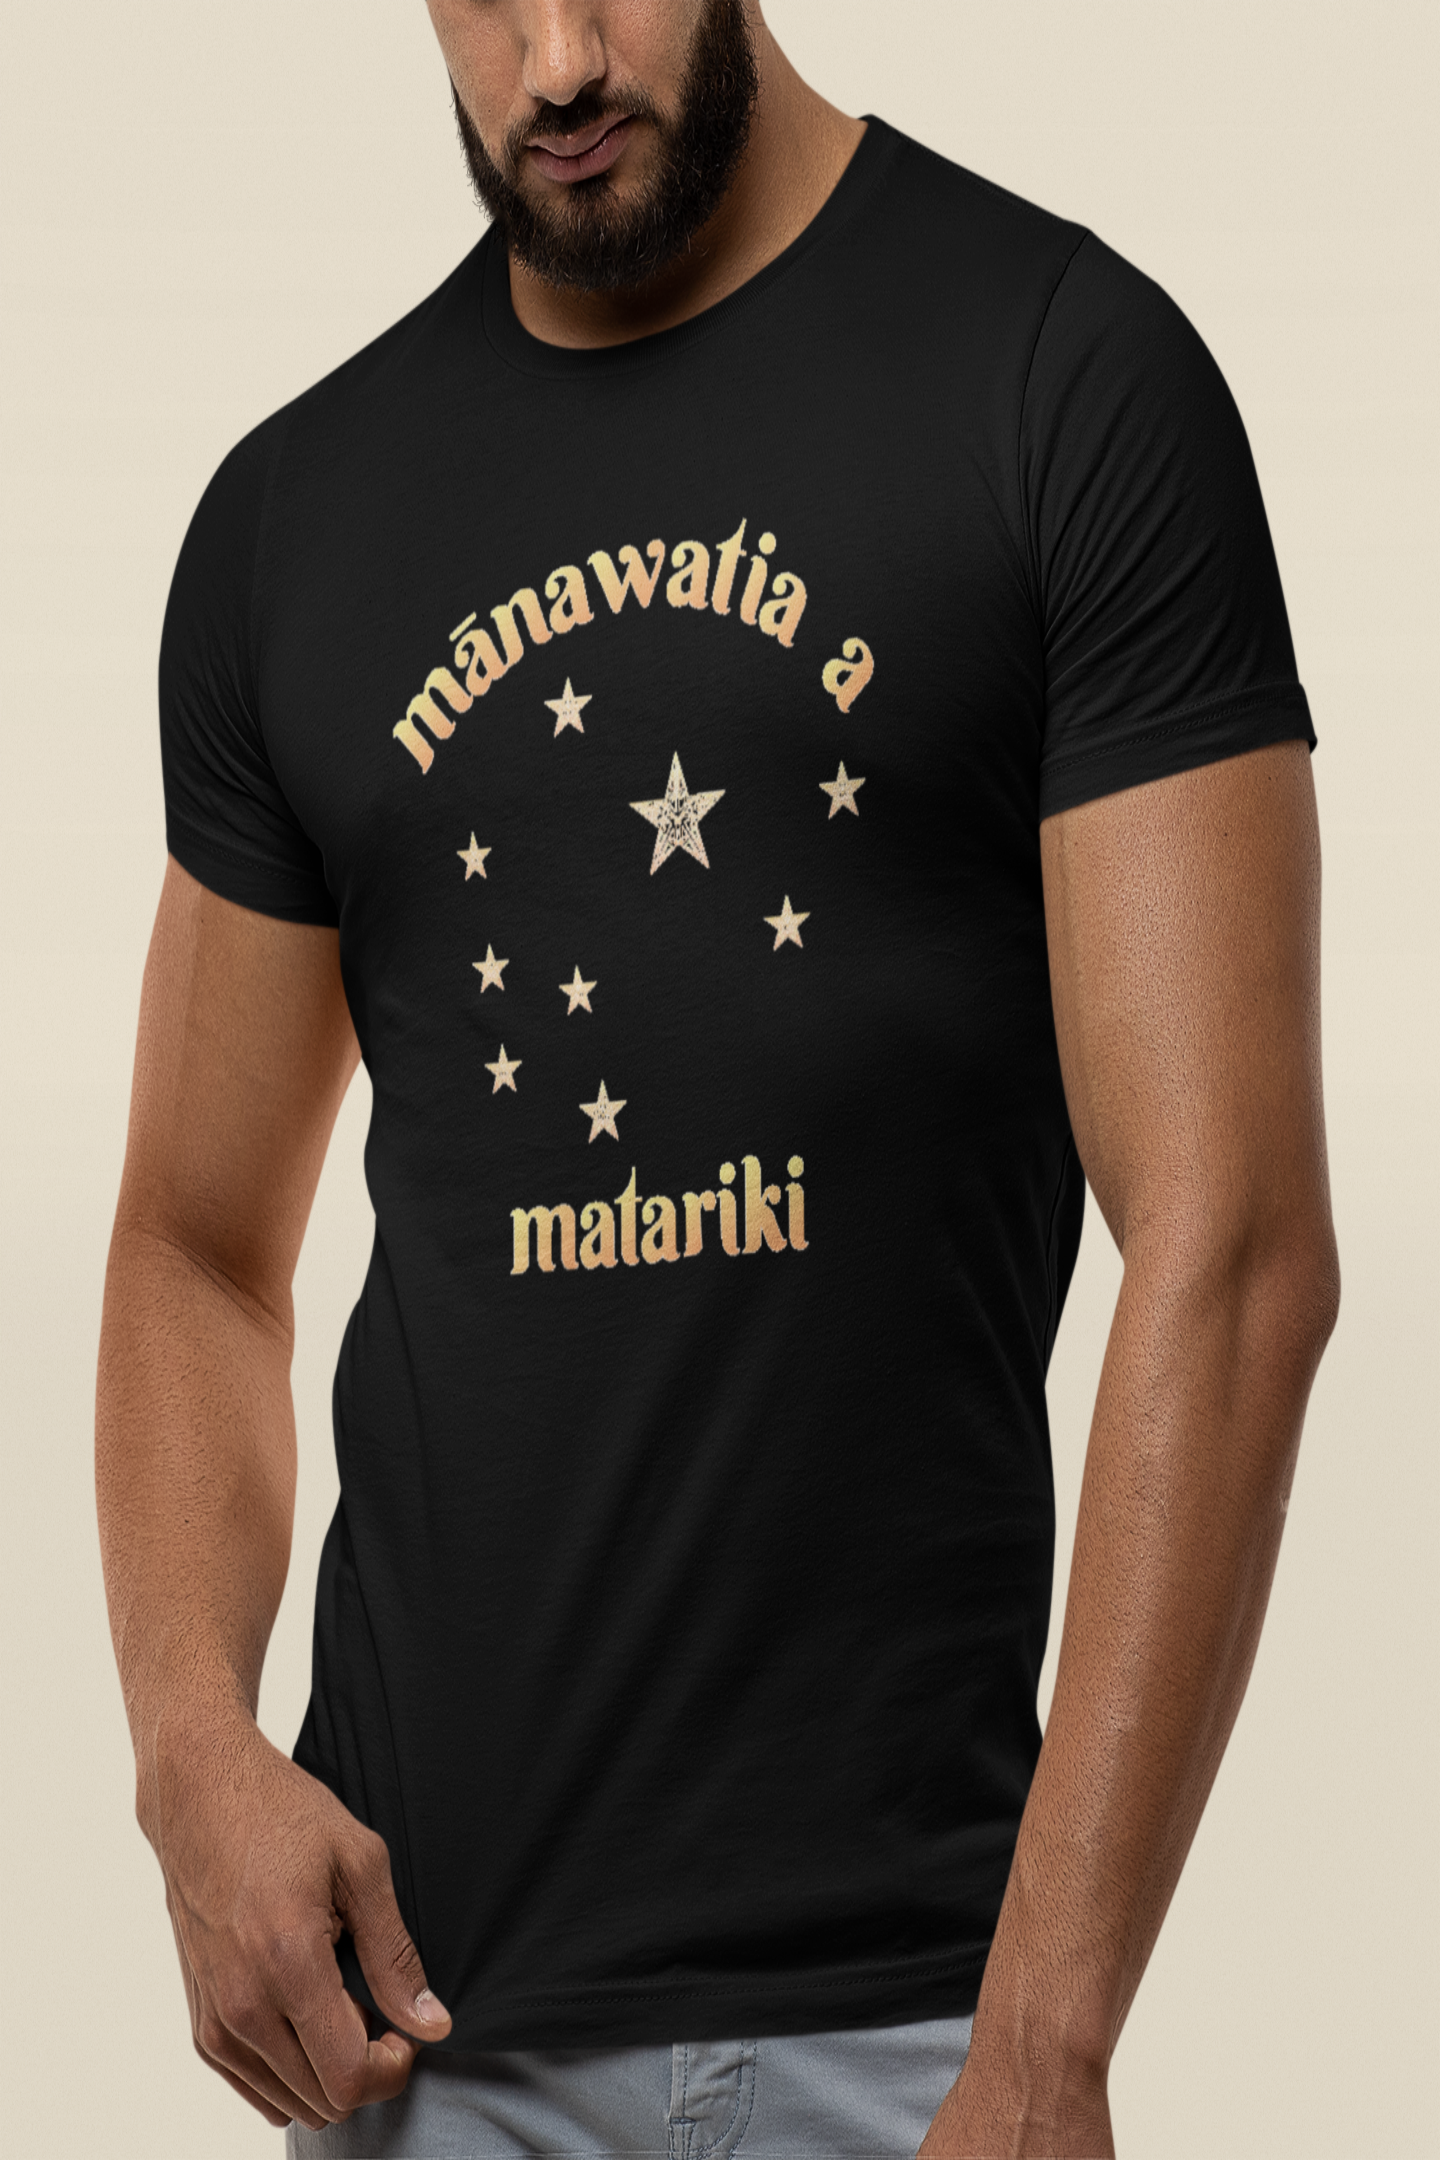 mānawatia a matariki (classic) - Adult Tee